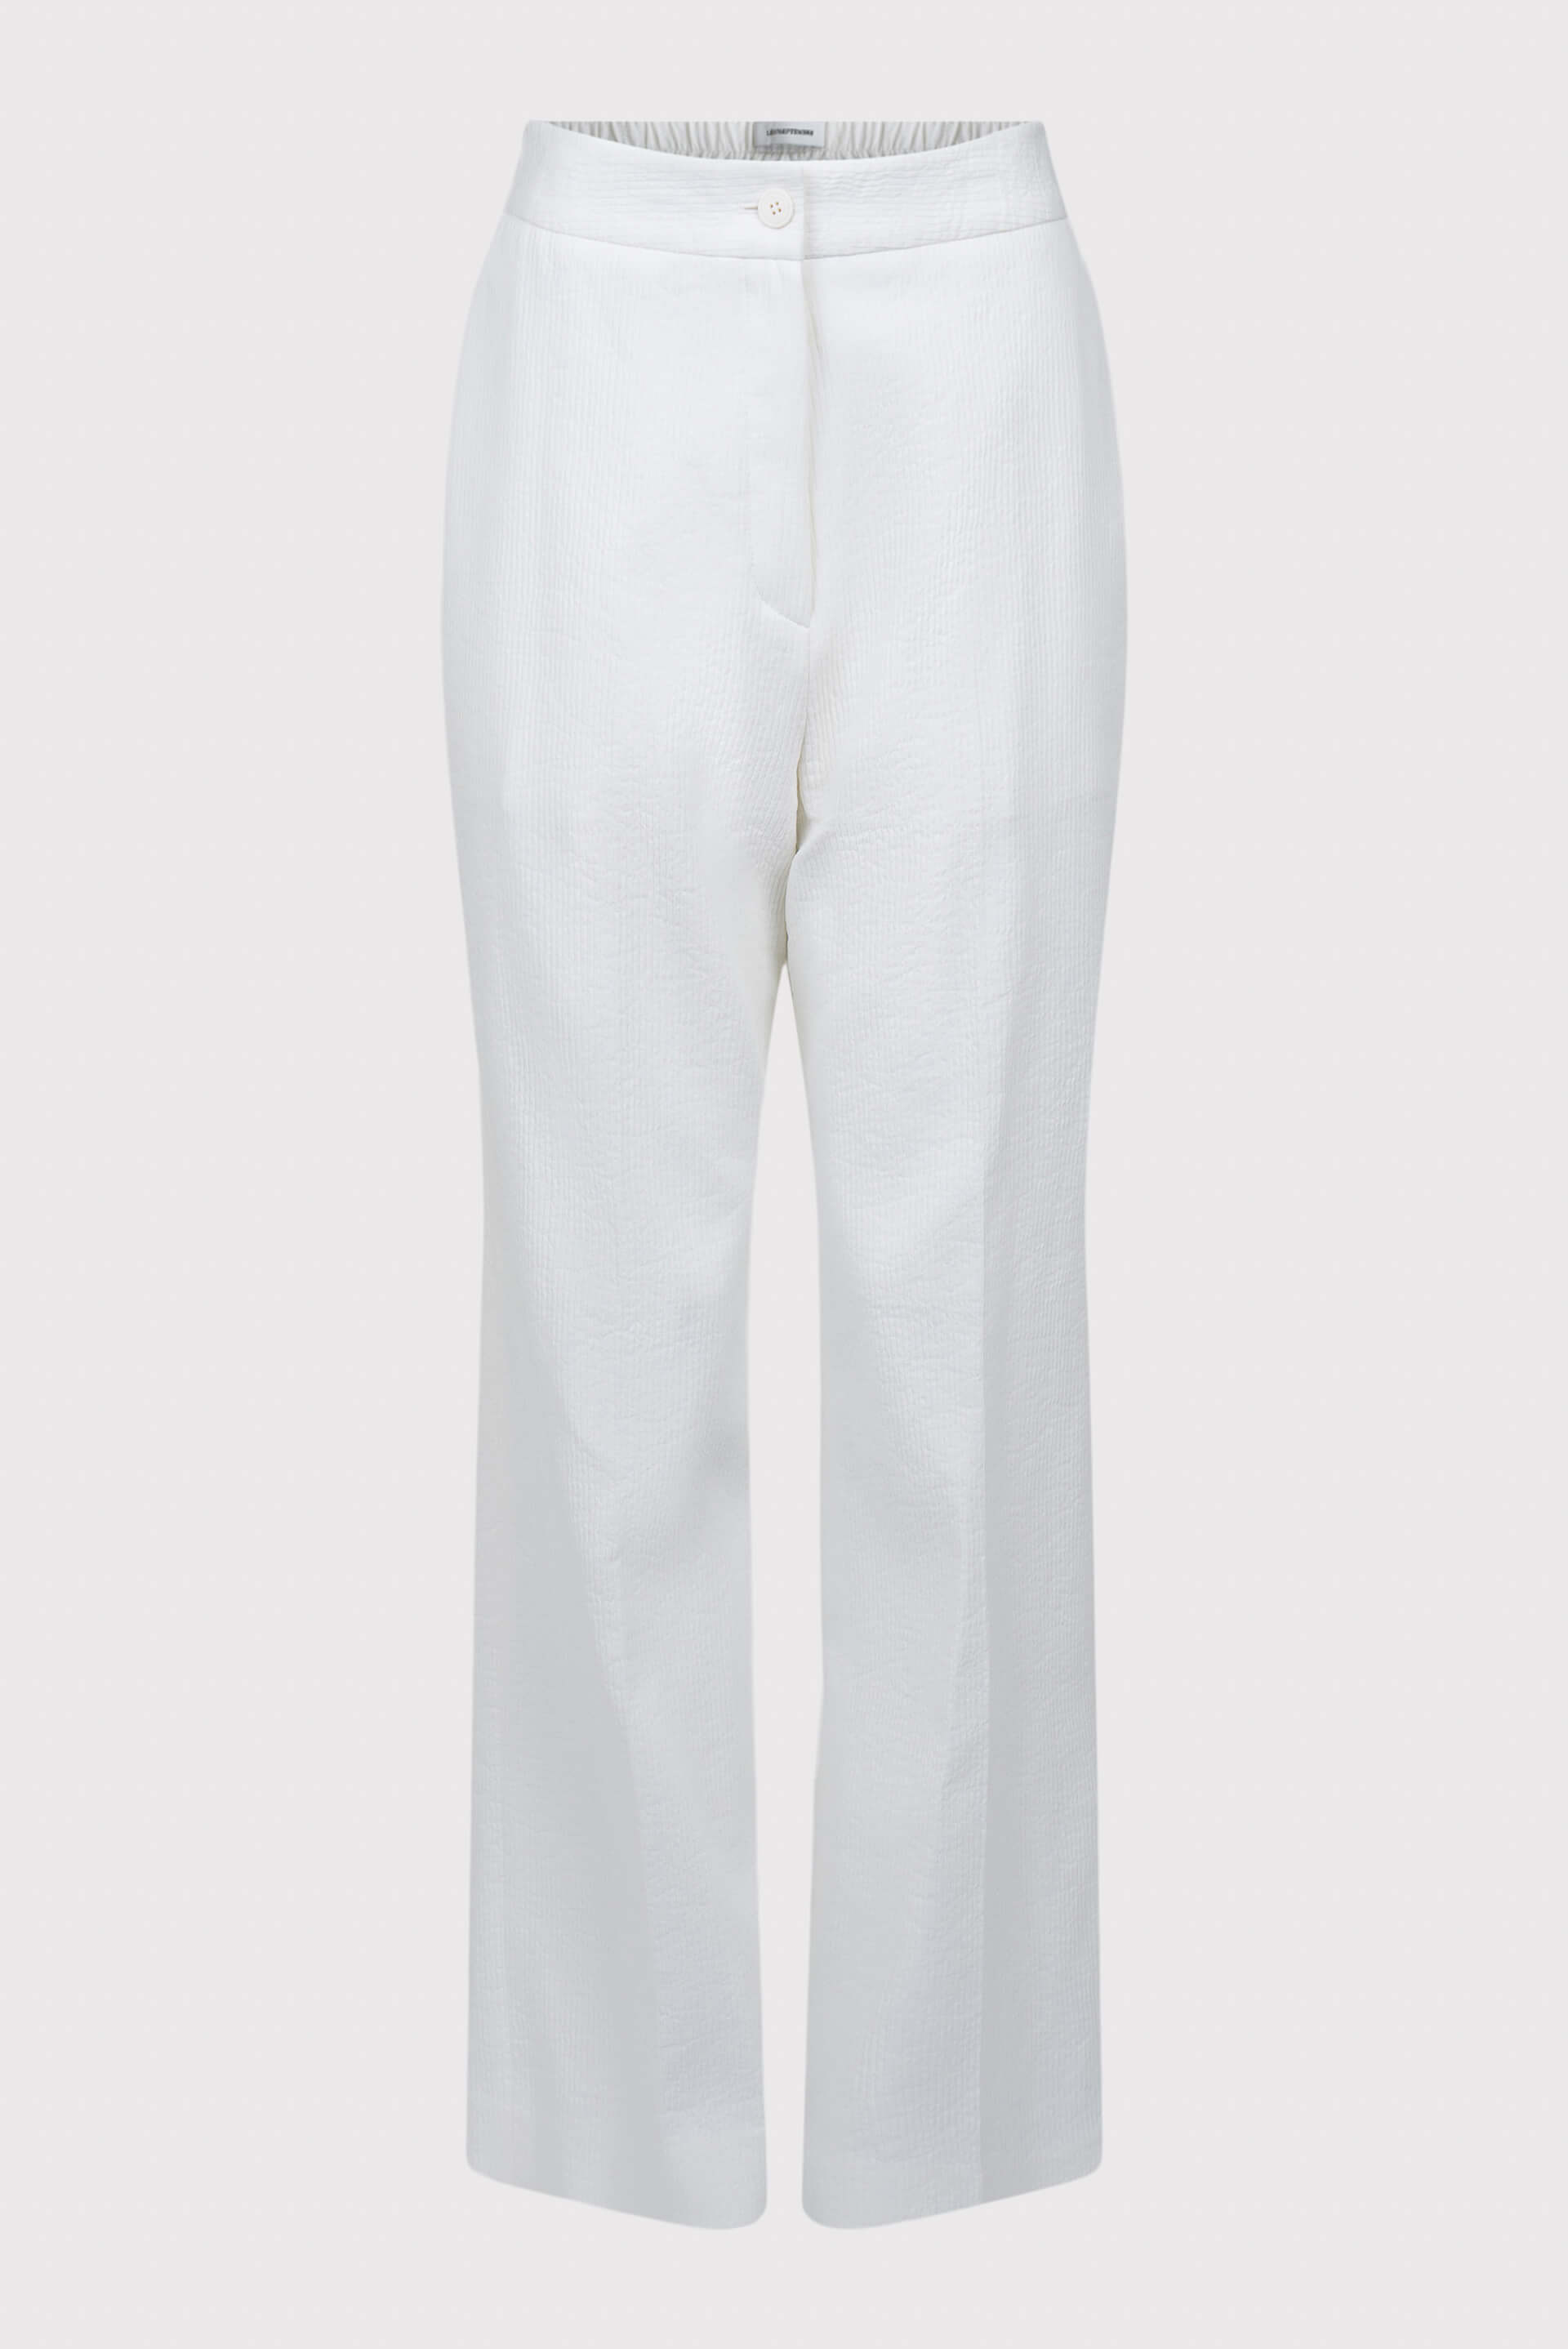 Stretch cotton trousers in Lime white: Luxury Italian Trousers | Boglioli®